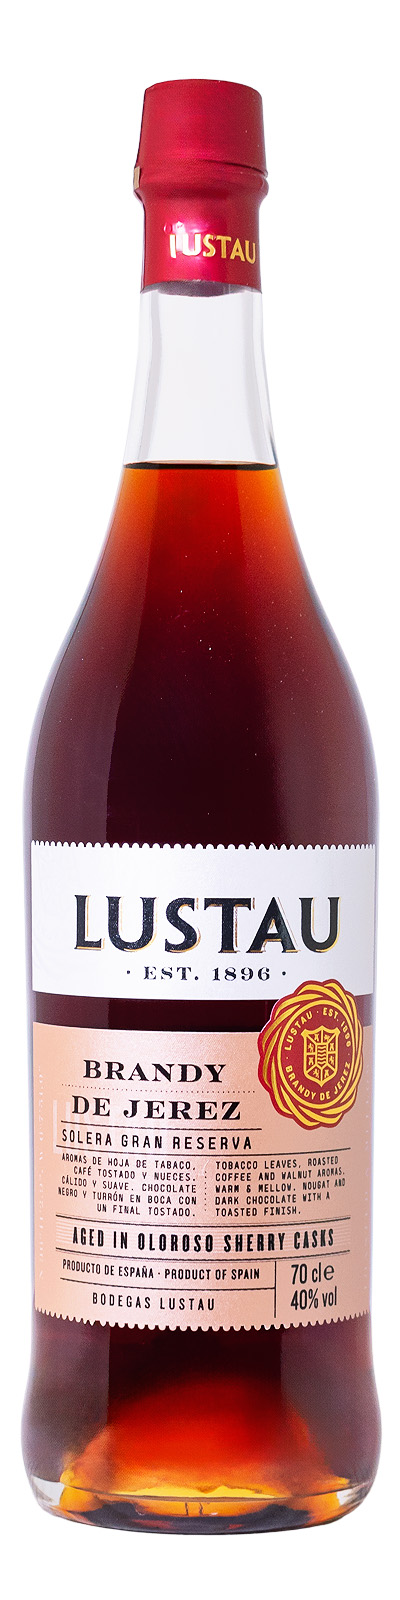 Lustau Solera Gran Reserva Brandy de Jerez - 0,7L 40% vol